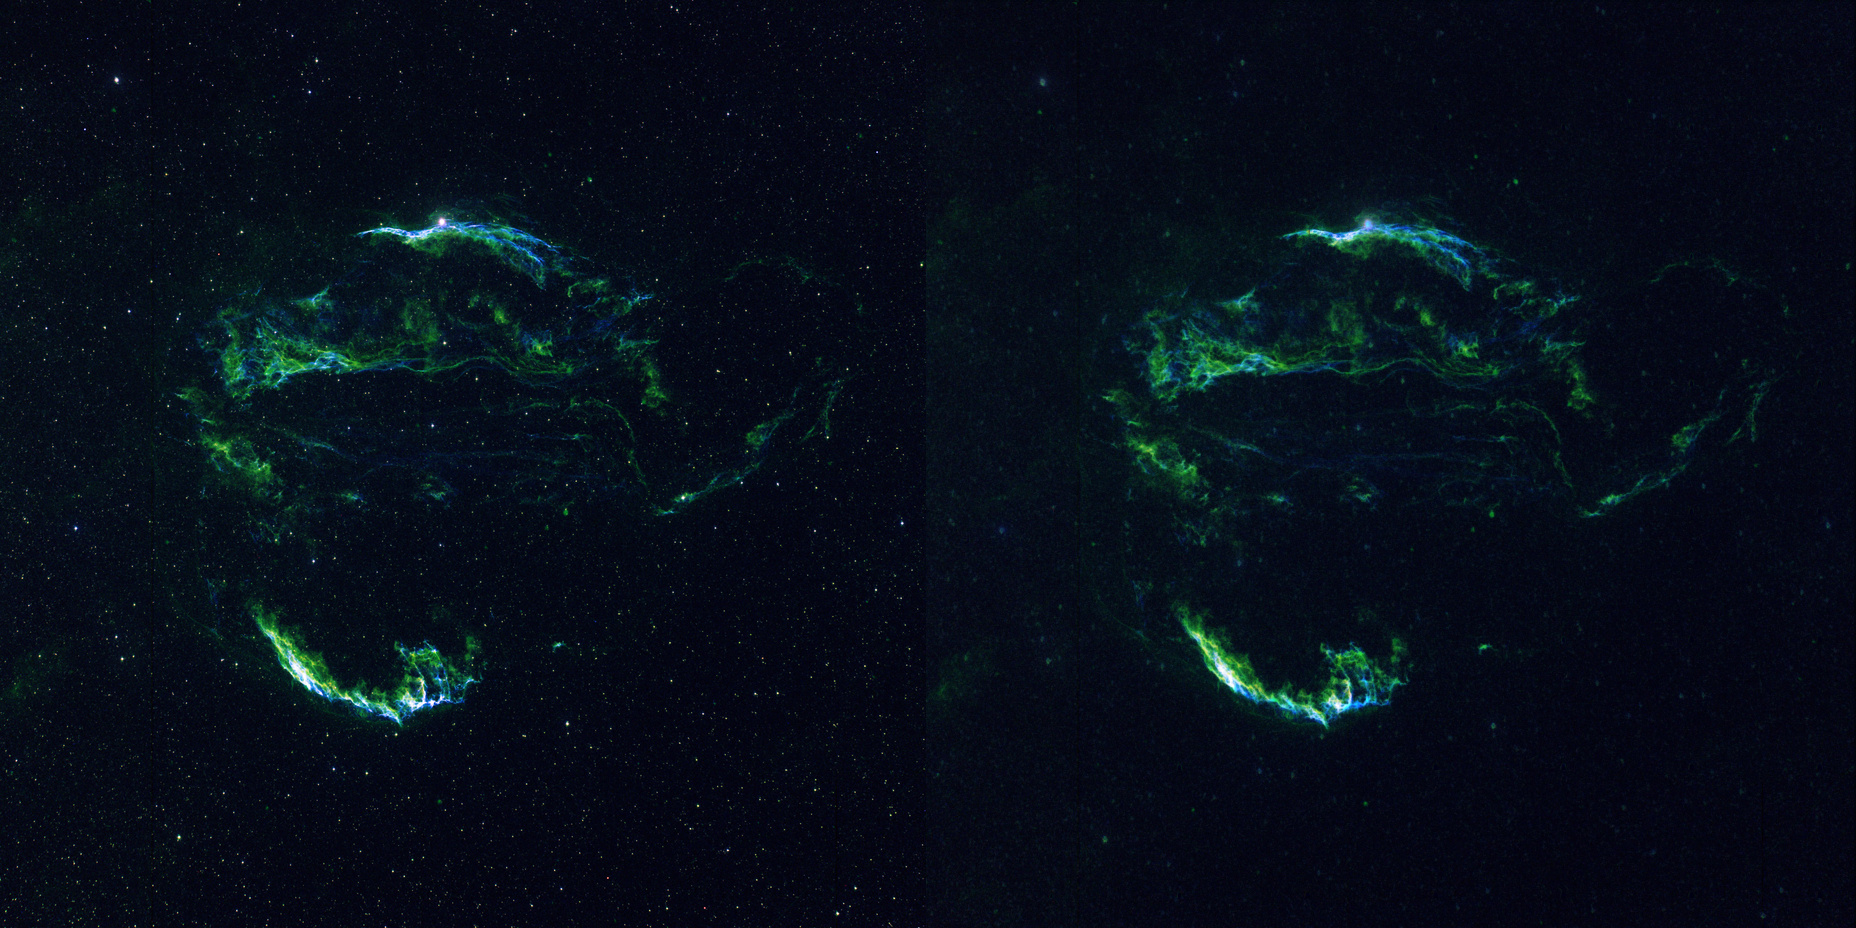 Original and starless image of Blue Horsehead Nebula